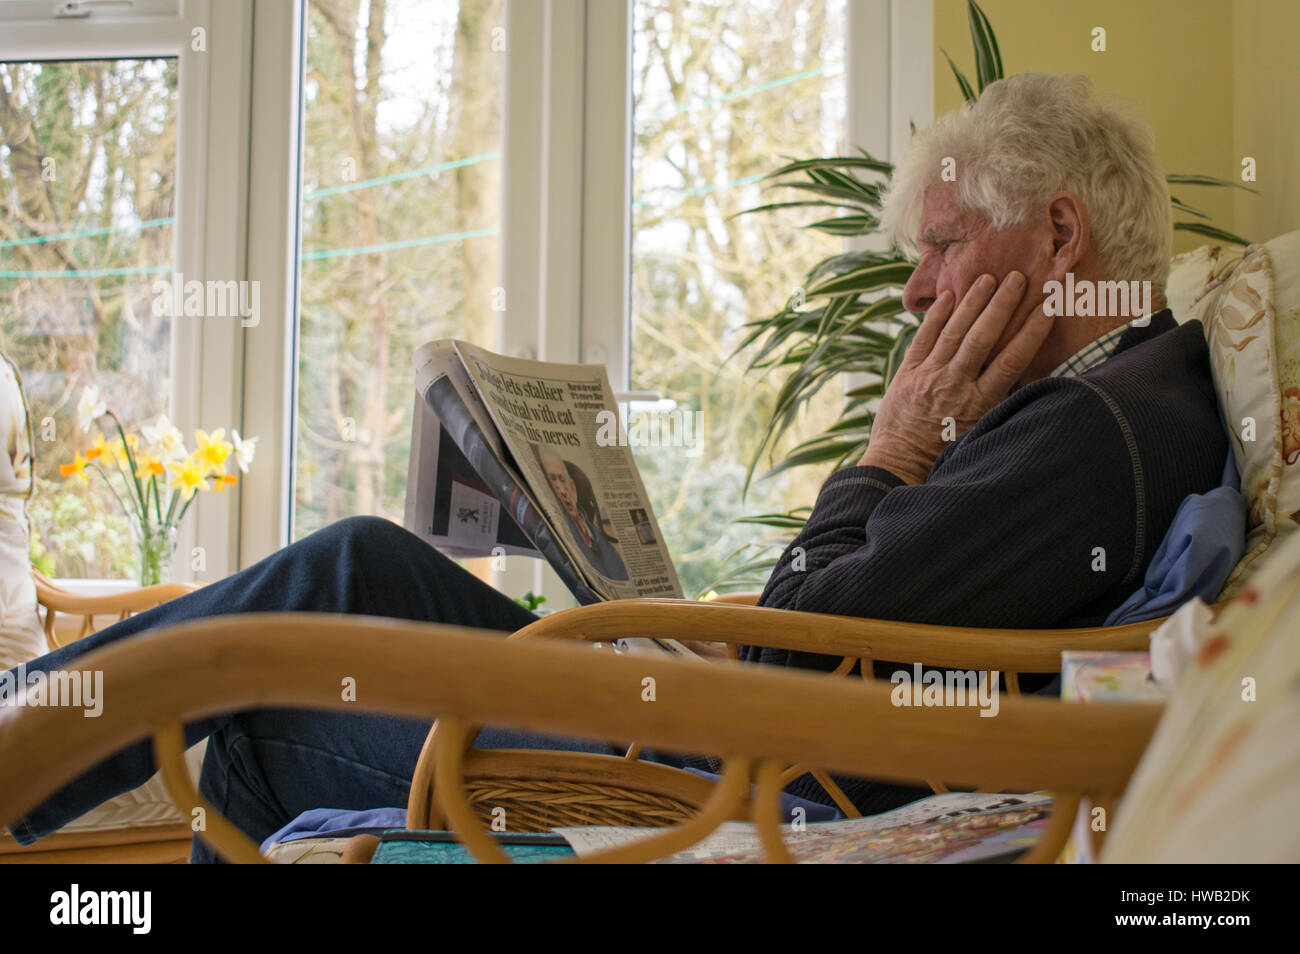 Elderly man reading newspaper Stock Photo